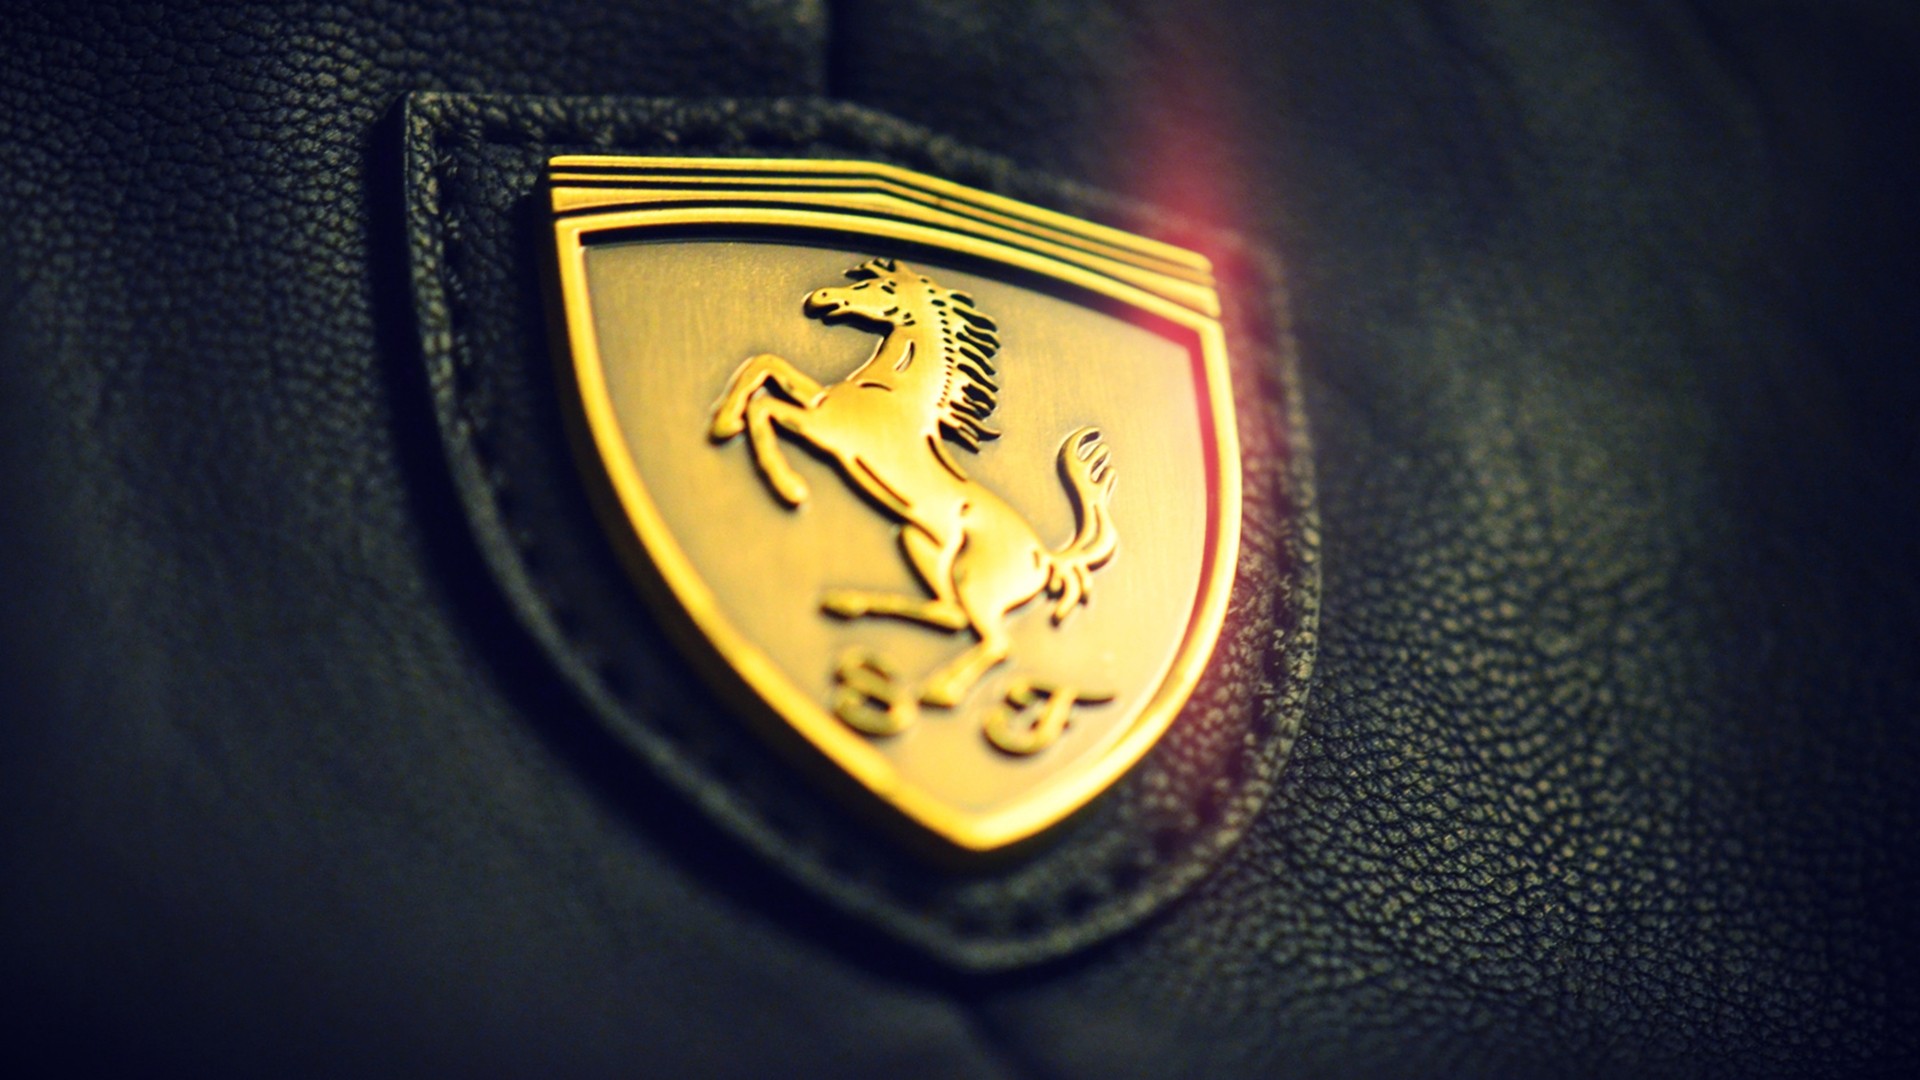 Leather Cars Gold Vehicles Logos Ferrari Emblem